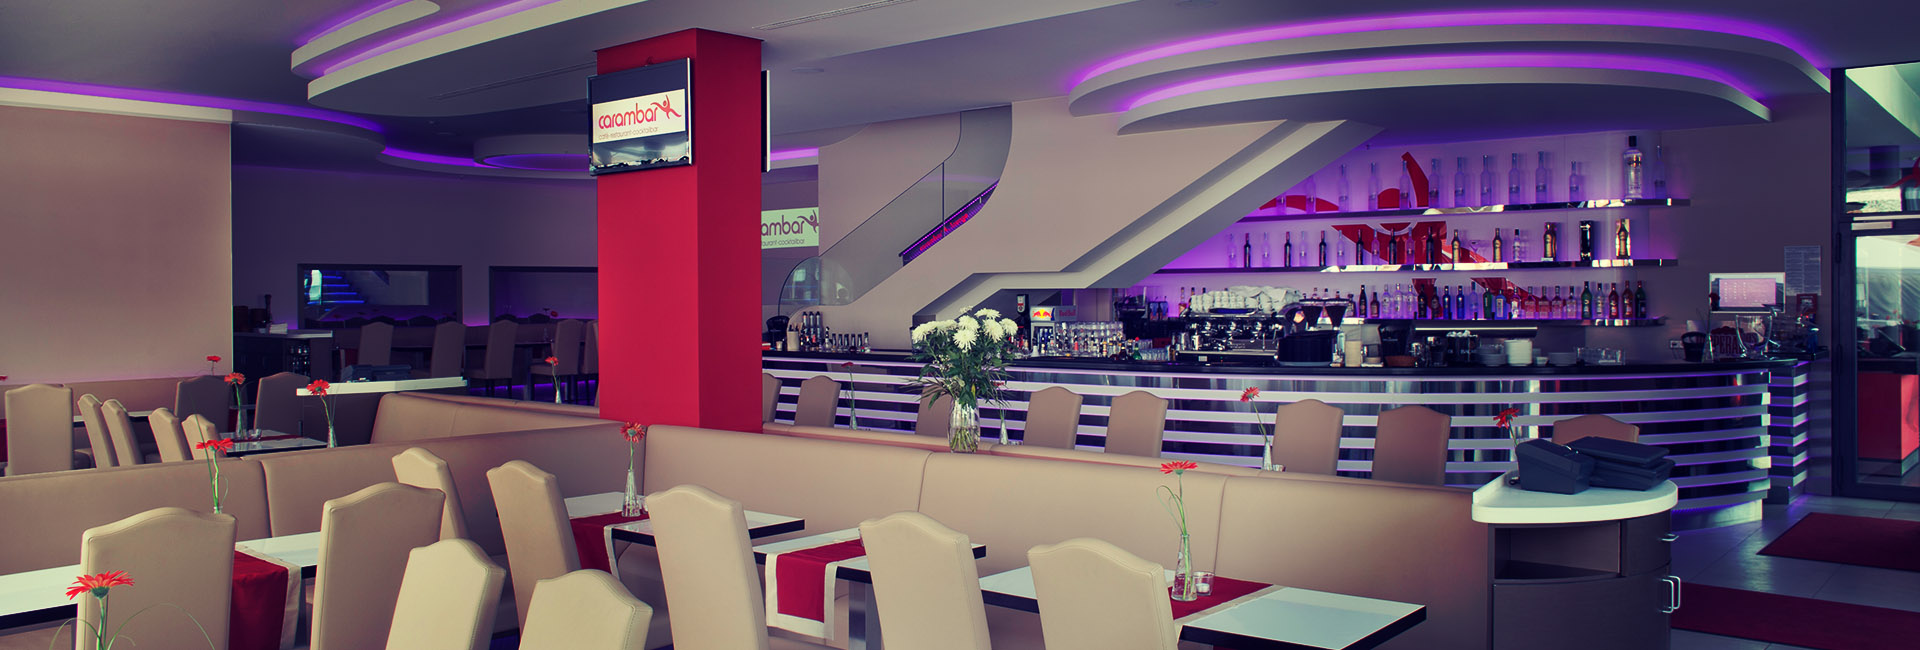 carambar-bar-lounge-restaurant-eventlocation-alexanderplatz-berlin-slider-1920x650-2